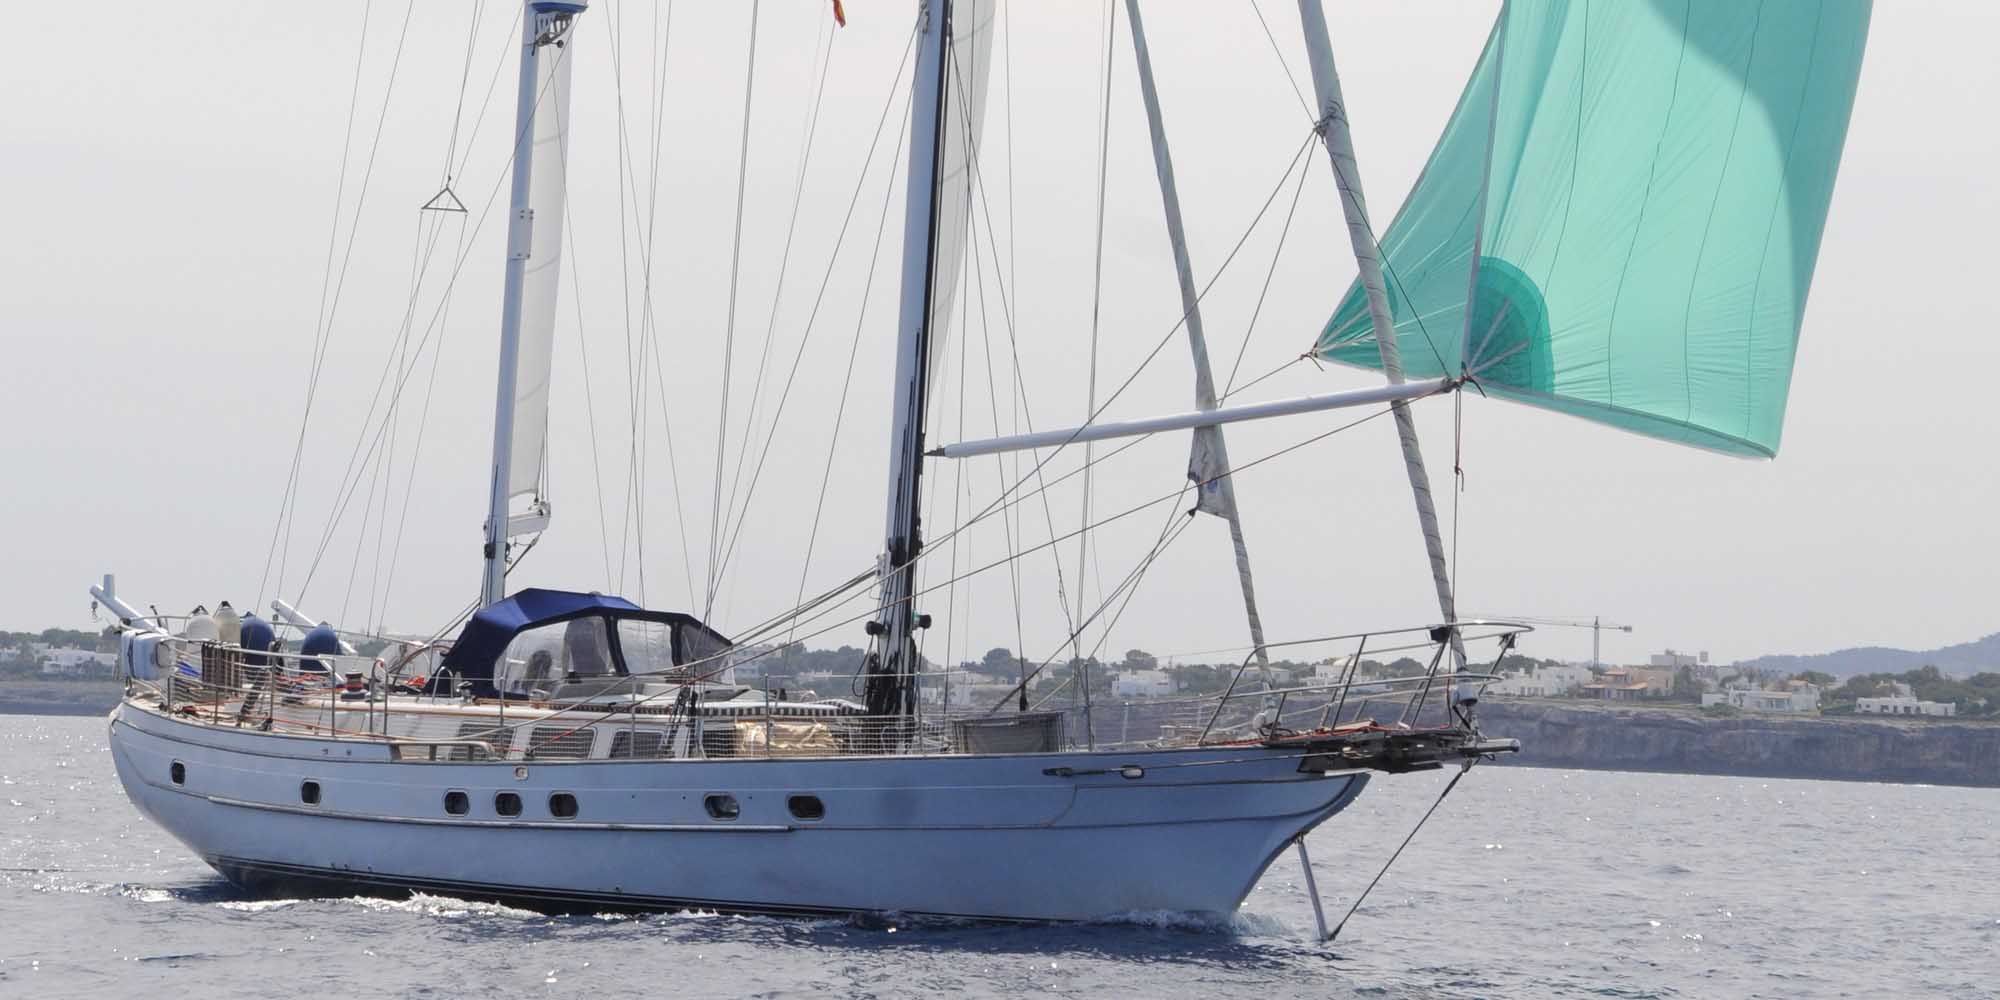 scorpio 72 yacht for sale